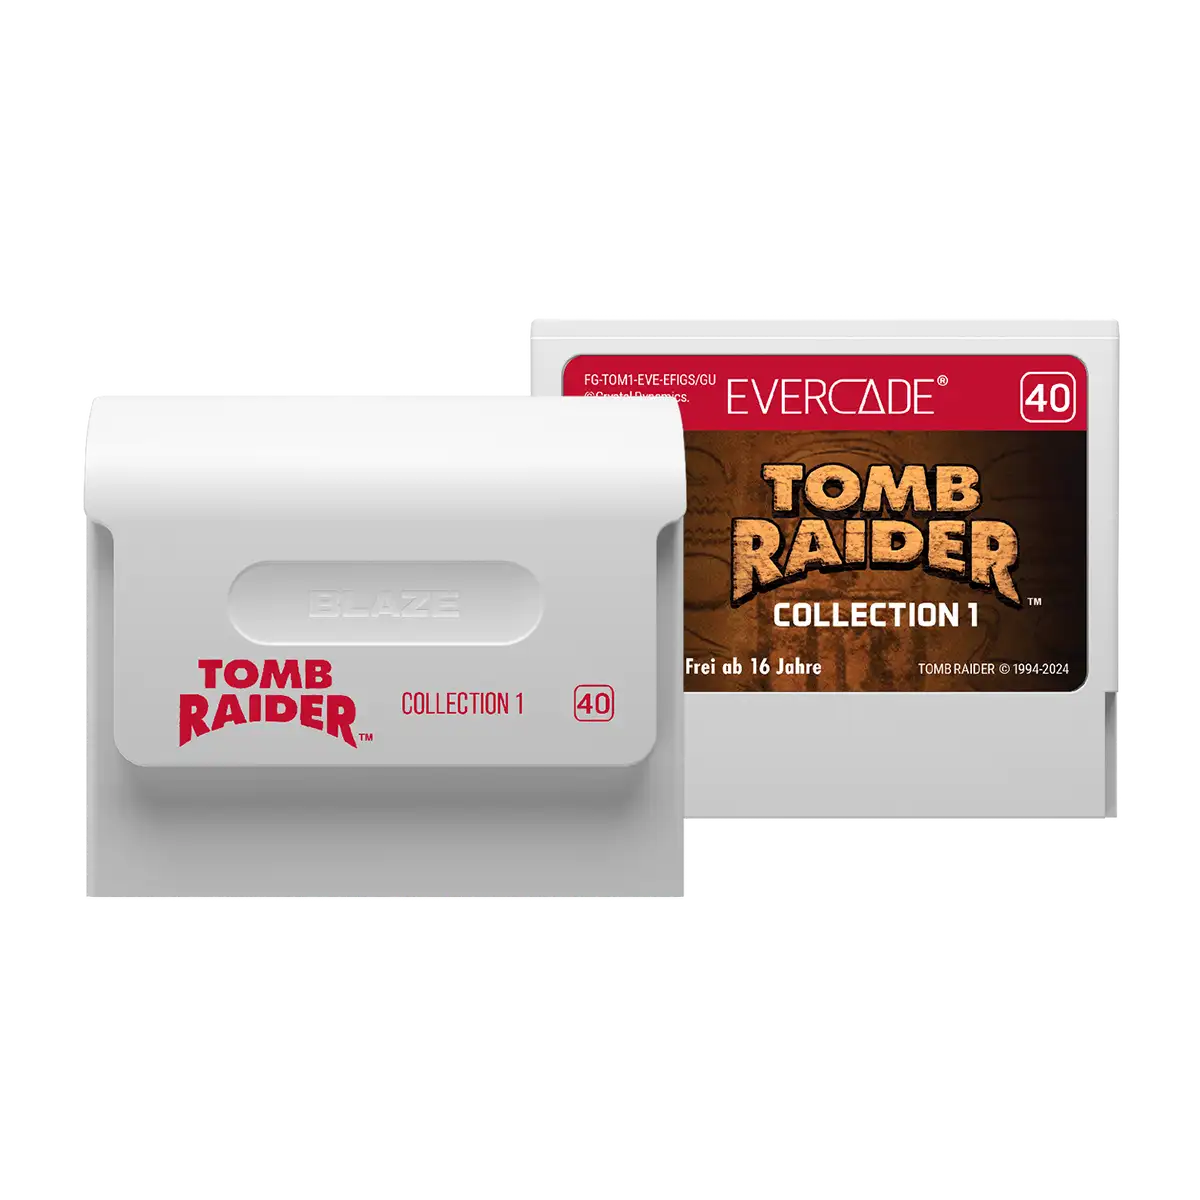 Blaze Evercade Tomb Raider Collection 1 Cartridge Image 2